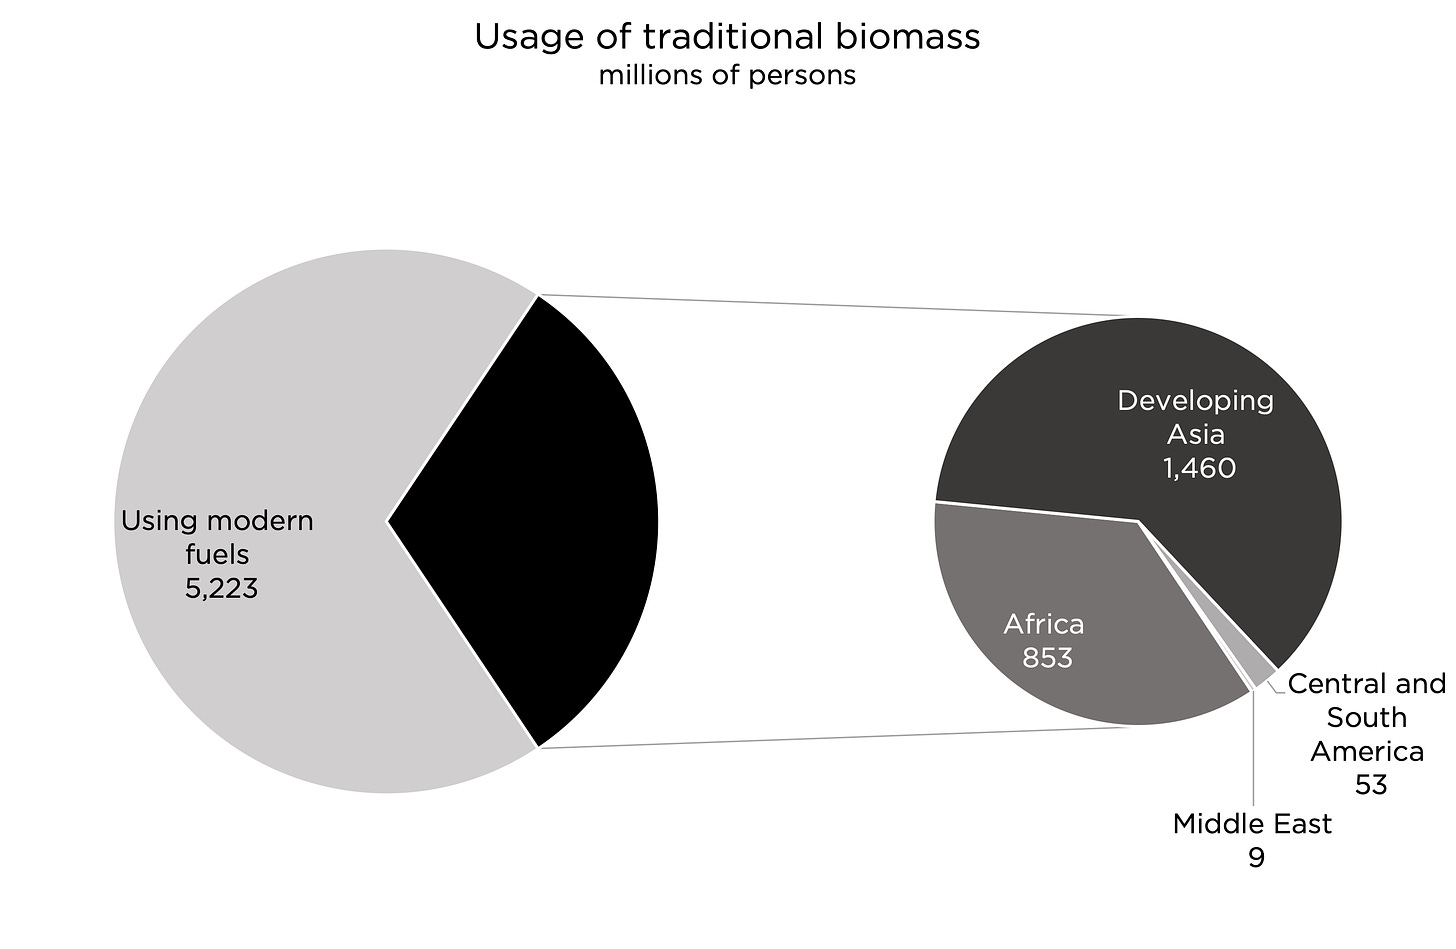 Usage of traditional biomass